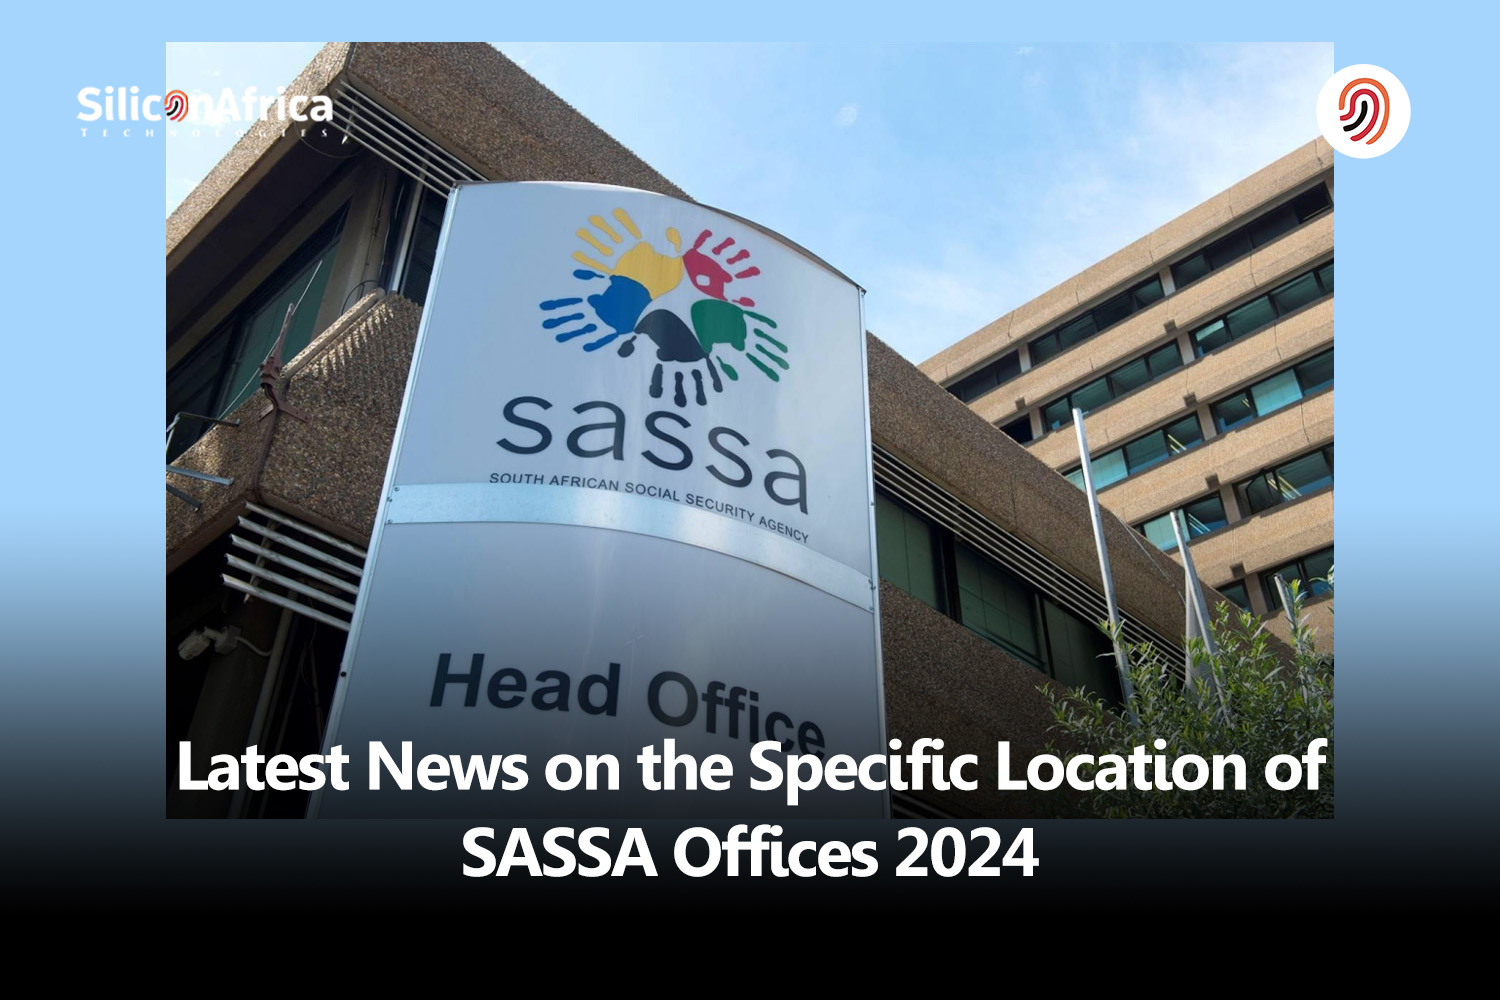 SASSA office relocation details